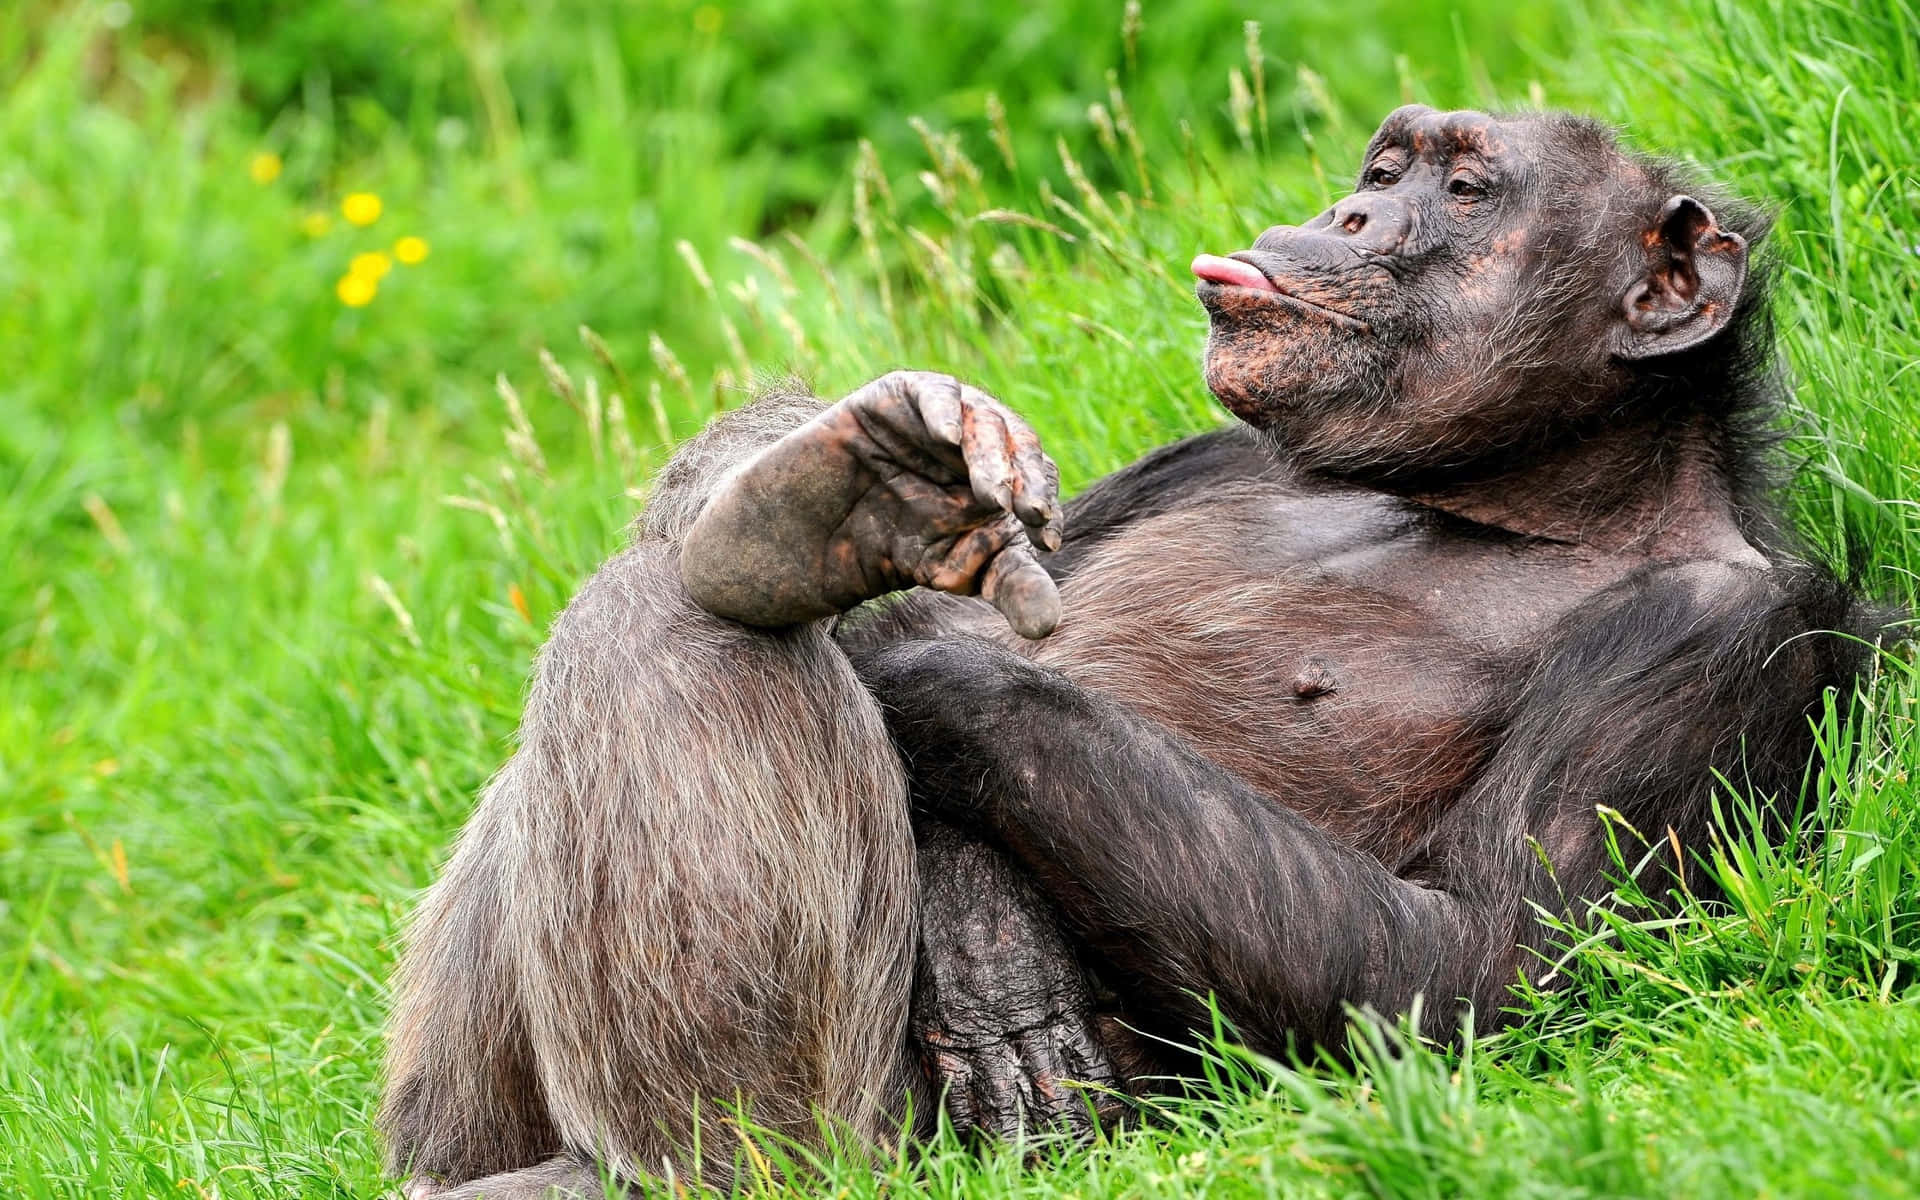 A Curious Chimpanzee Enjoying a Sunlit Afternoon